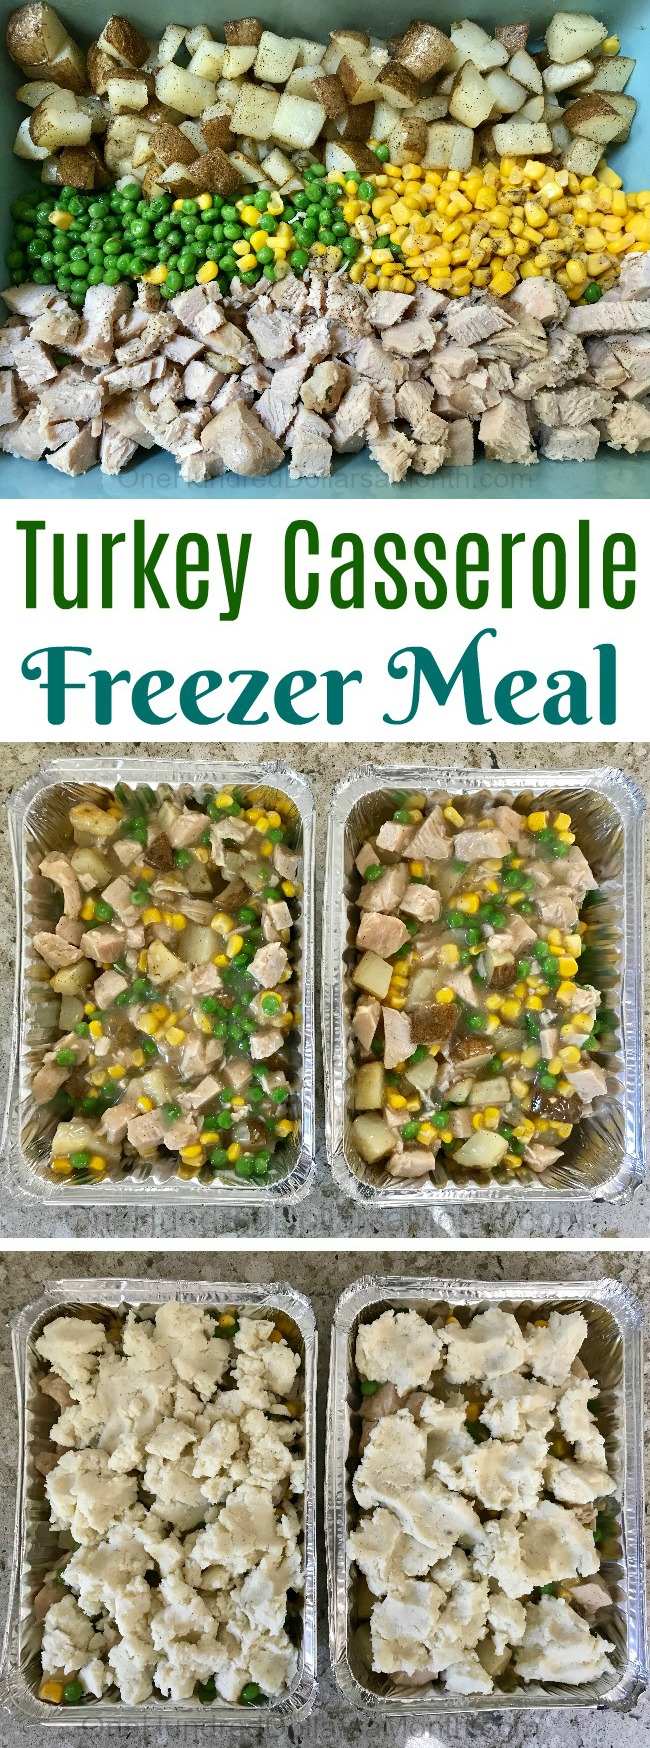 Turkey Casserole Freezer Meal with Mashed Potato Frosting